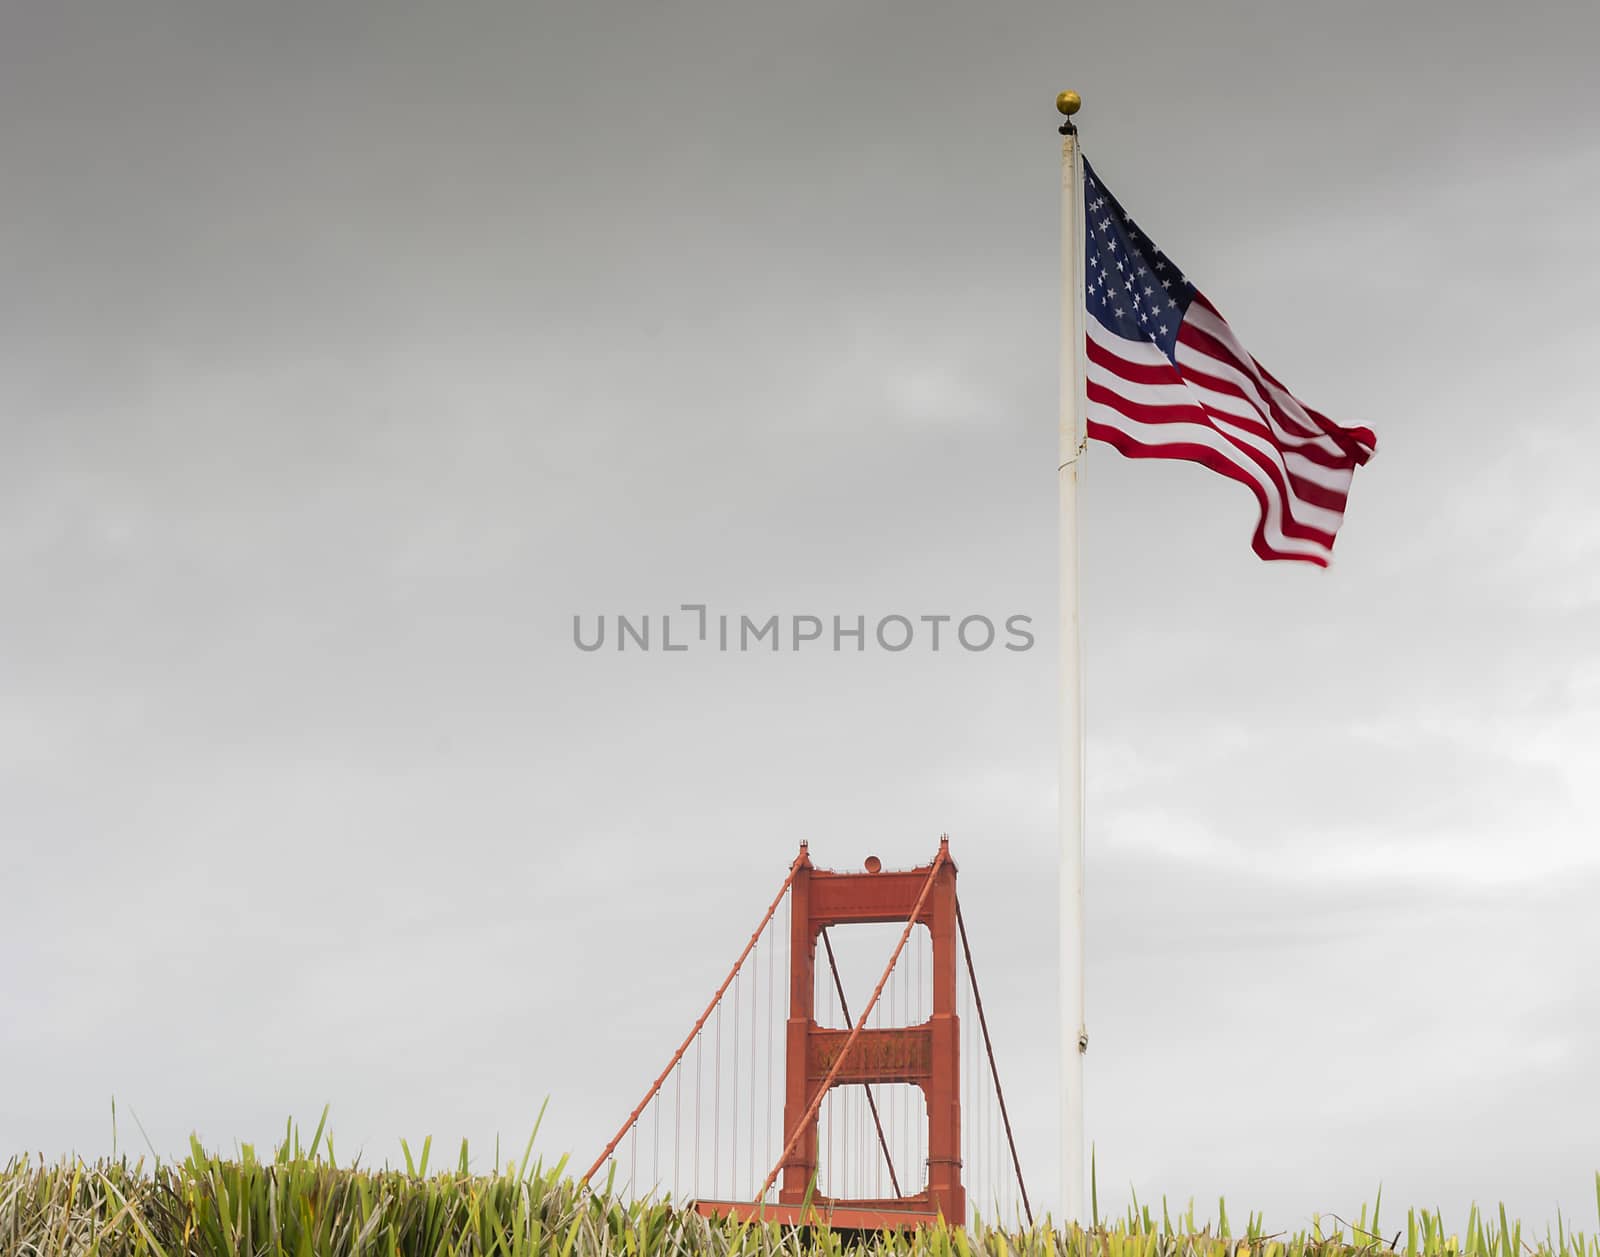 Golden Gate Bridge with American flag by rarrarorro